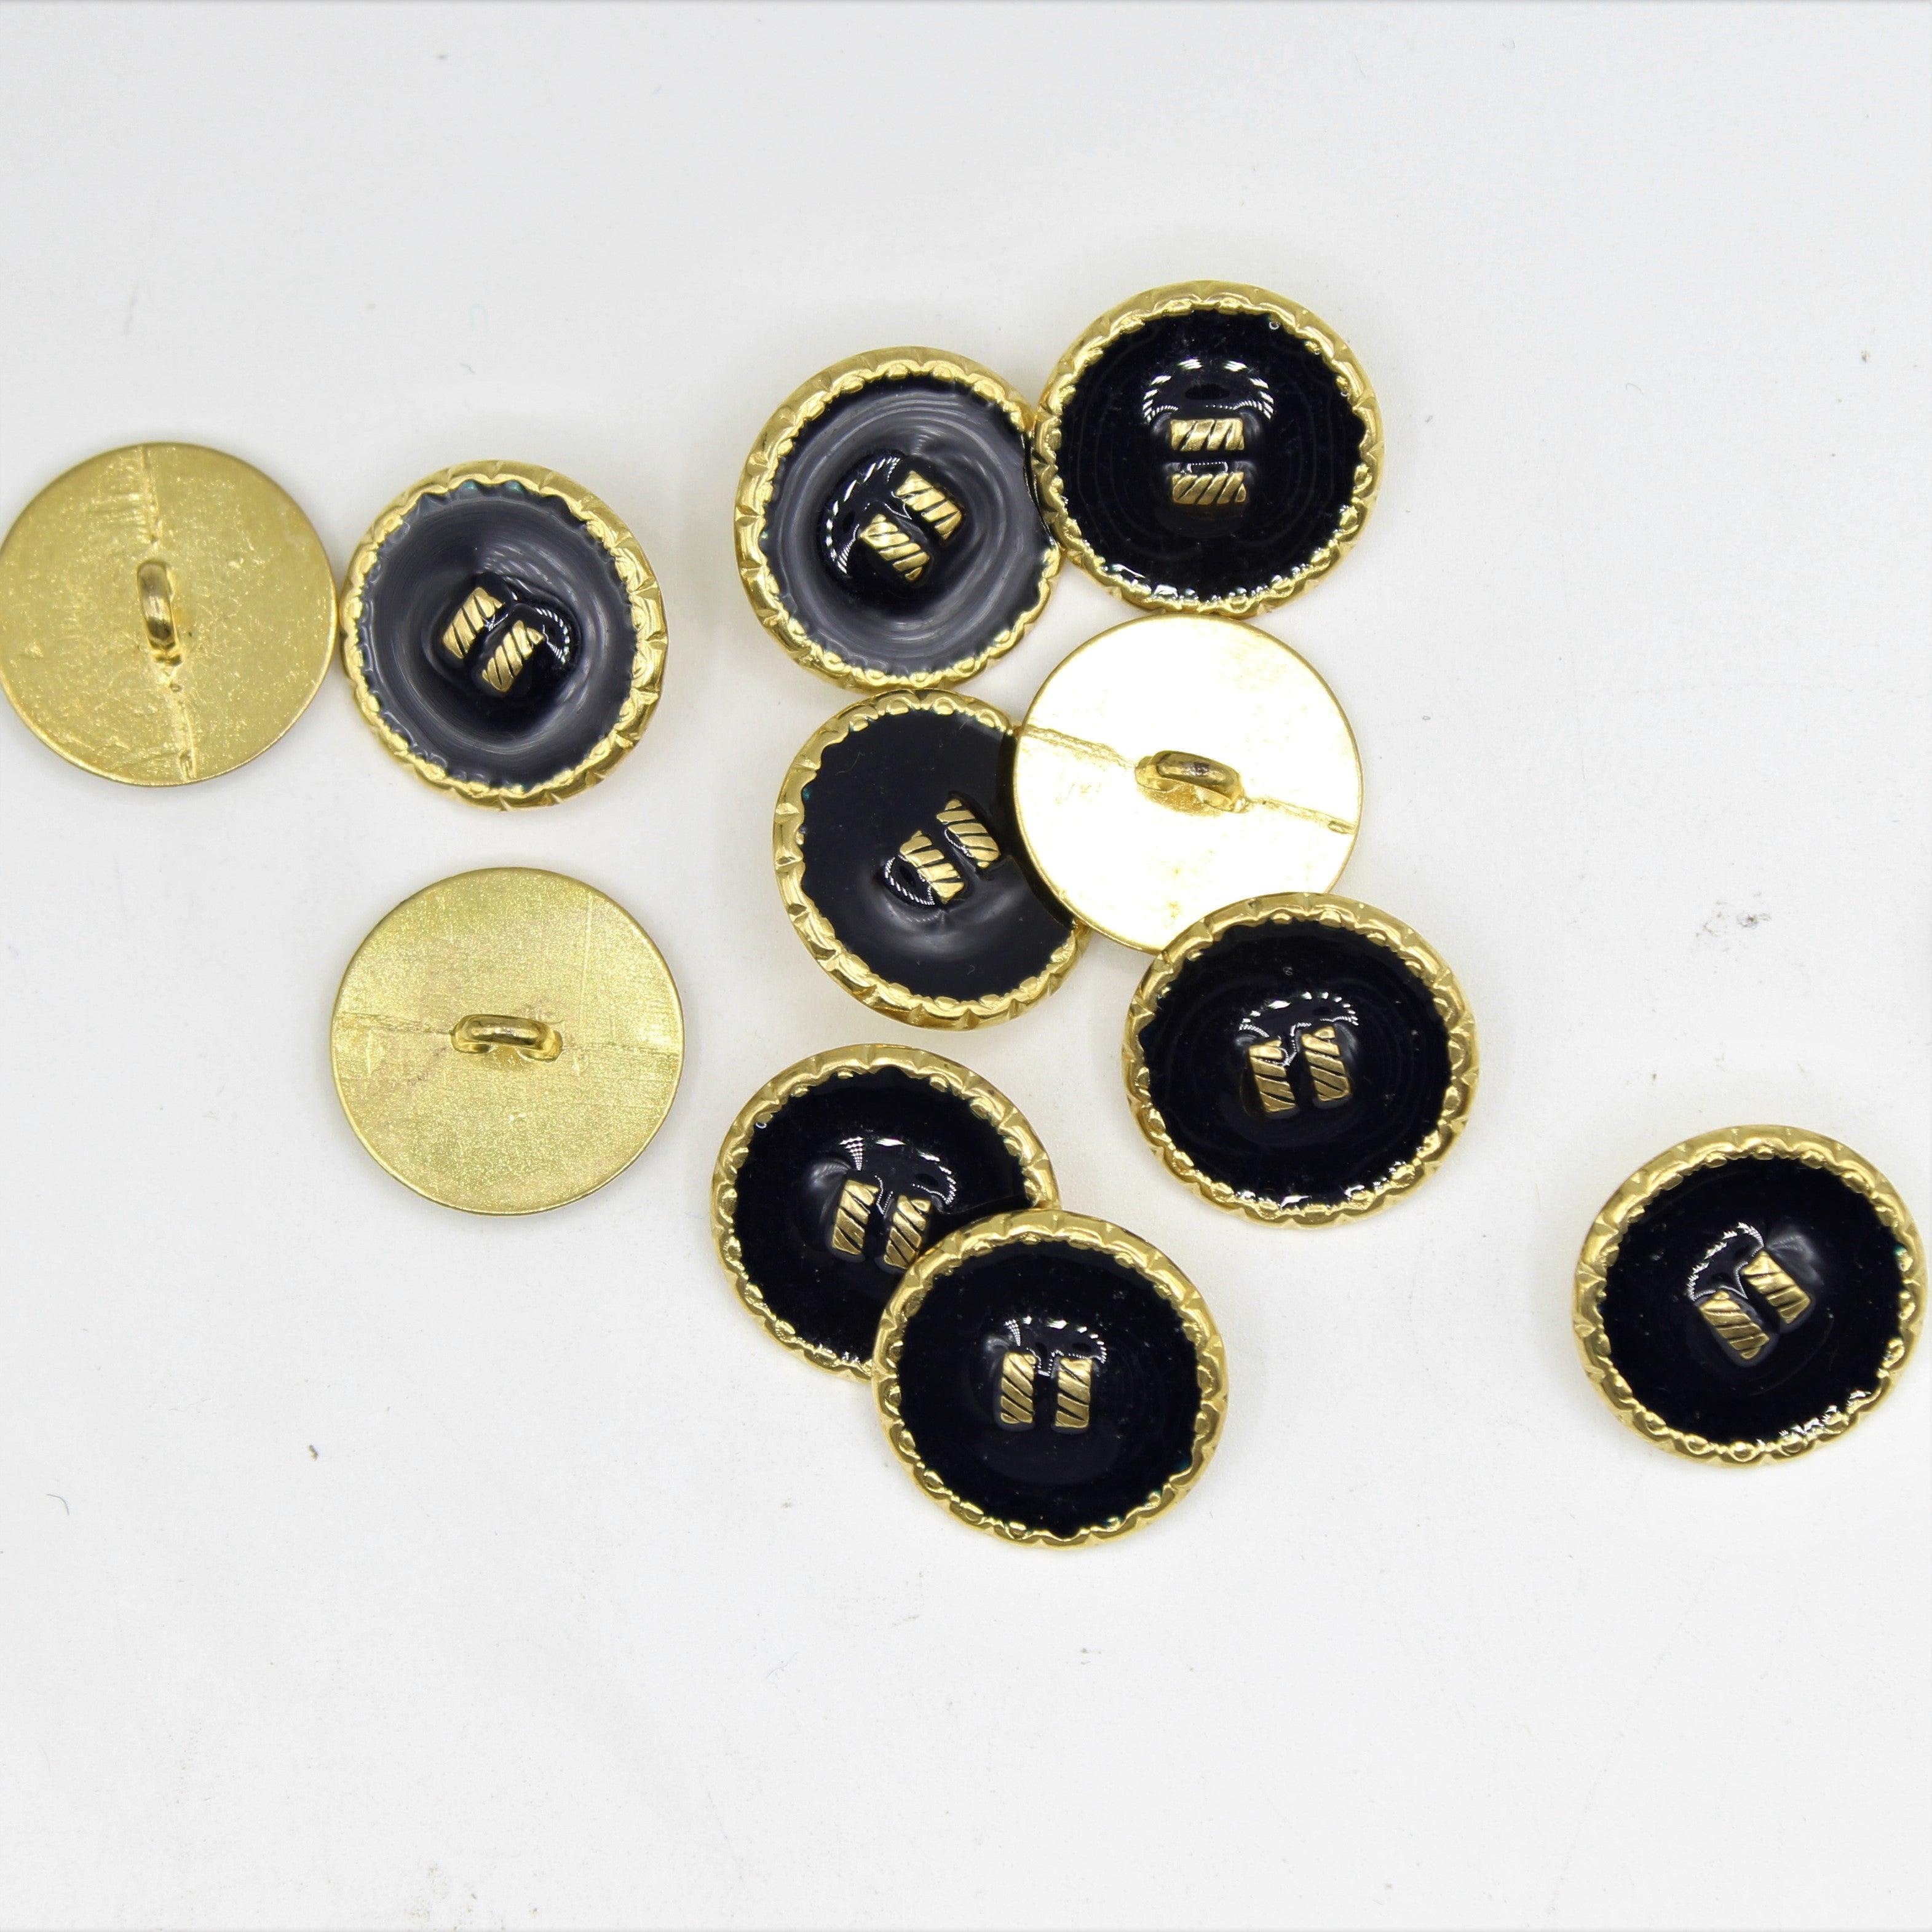 20 Pieces Old Brass Military Zamak Metal Shank Buttons Size 20mm #KZQ500032  boutonboutonsbutonsbuttonbuttonsgoldhotknoopknoop op  voetknopknopenknoppknoppenKZQKZQ5000shankzamak – ACCESSOIRES LEDUC